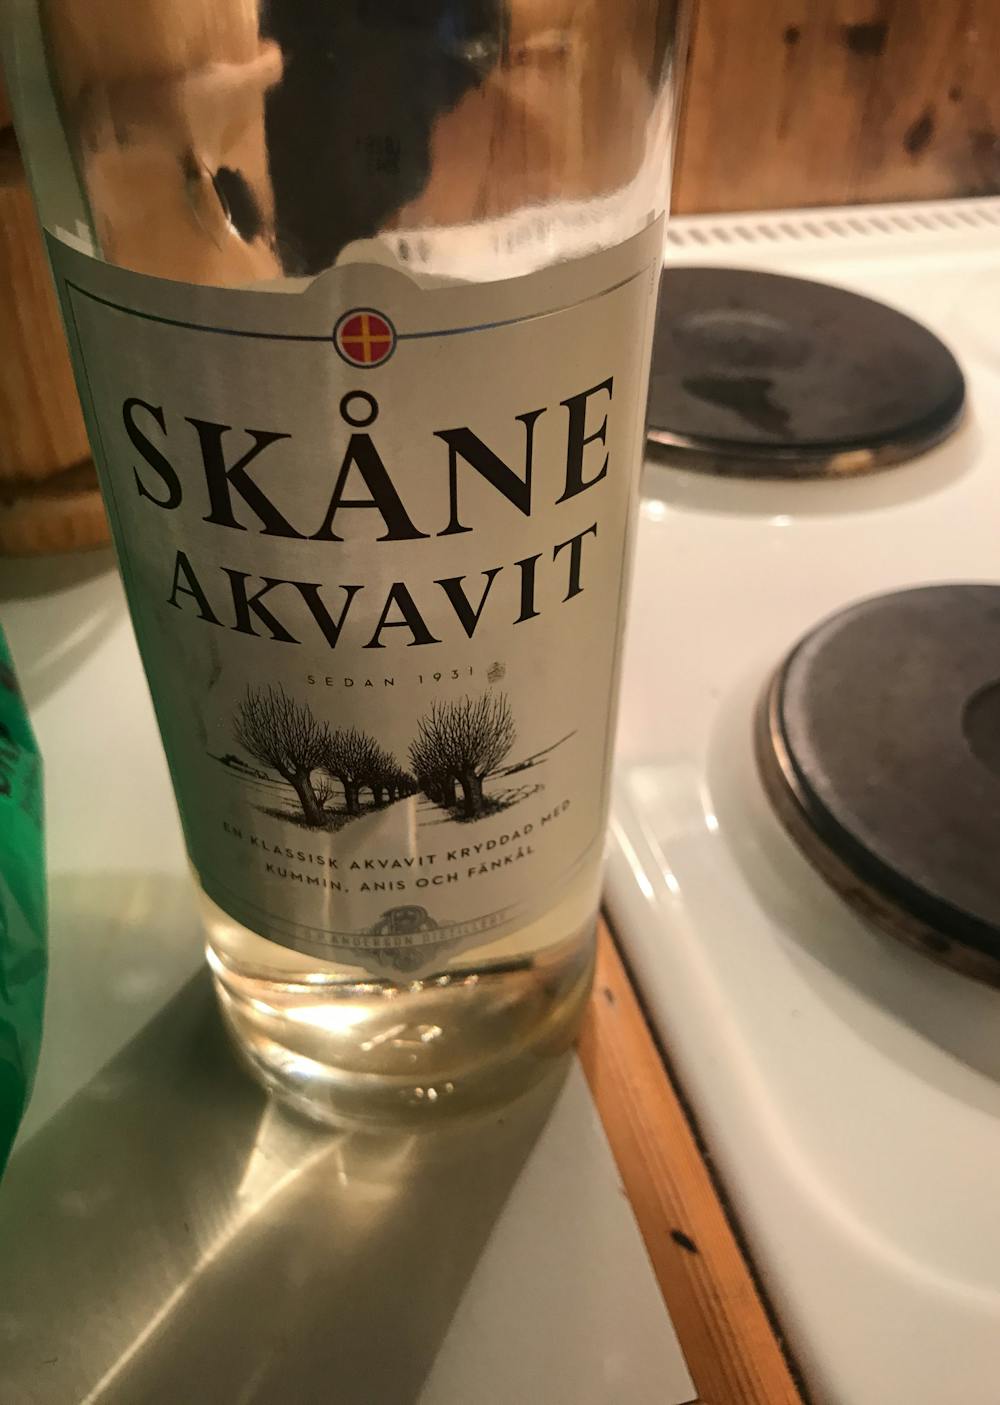 Skåne akvavit, O.P. Anderson distillery